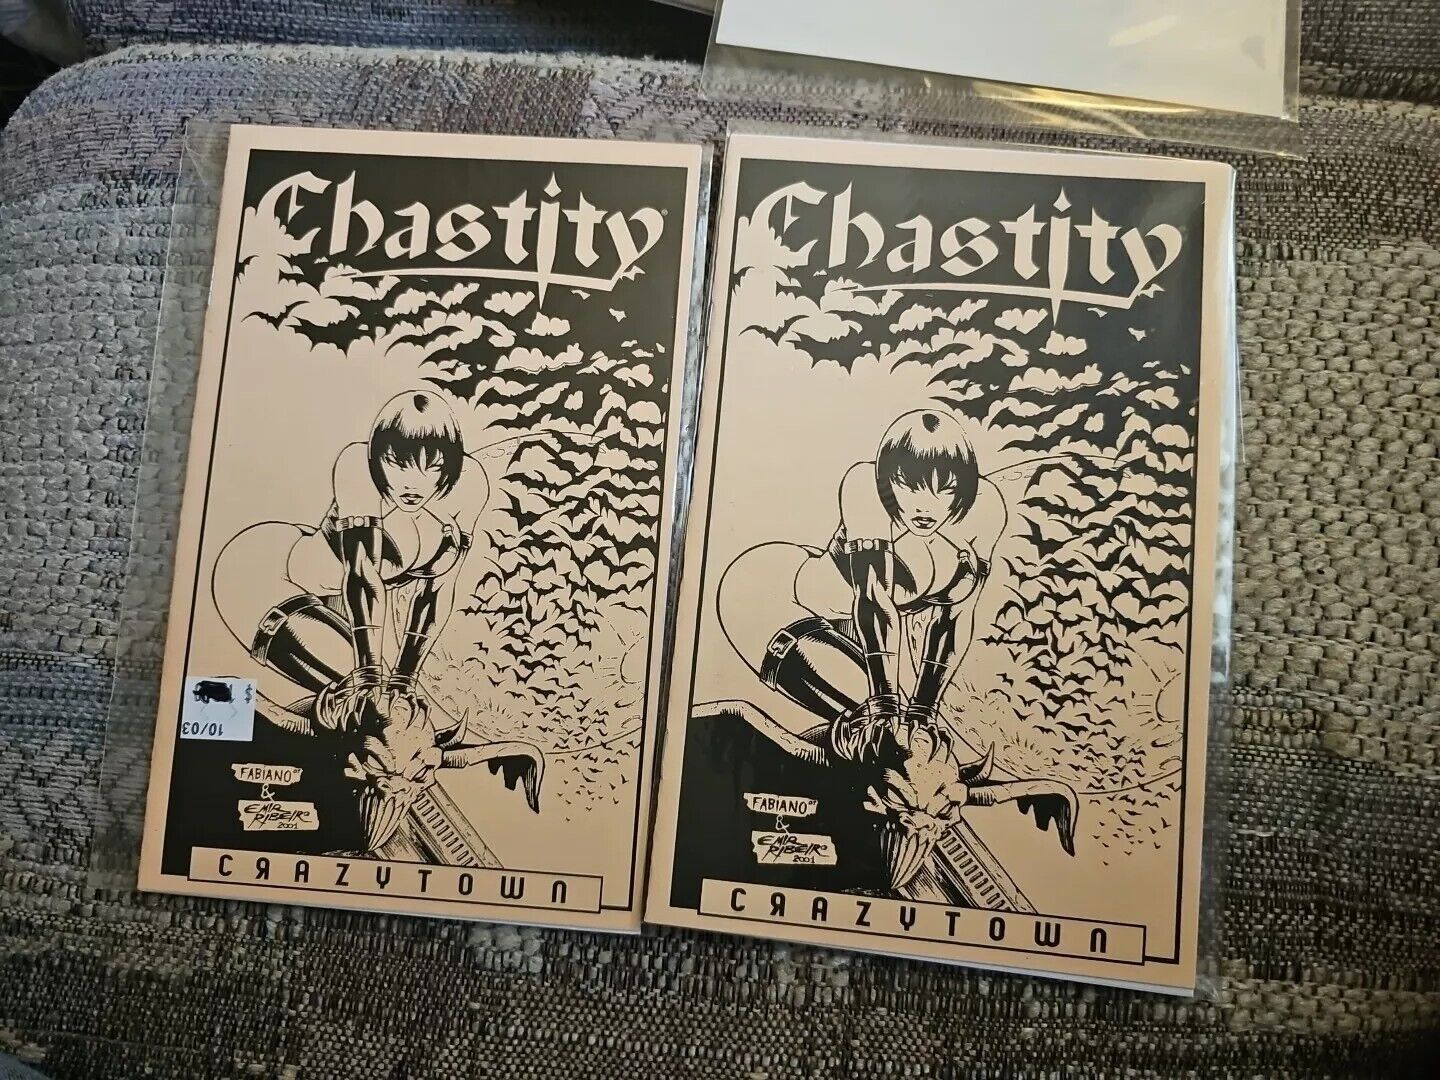 Chastity Crazy Town Ashcans Reg Lim 999/ Error Variant, Chaos Comics